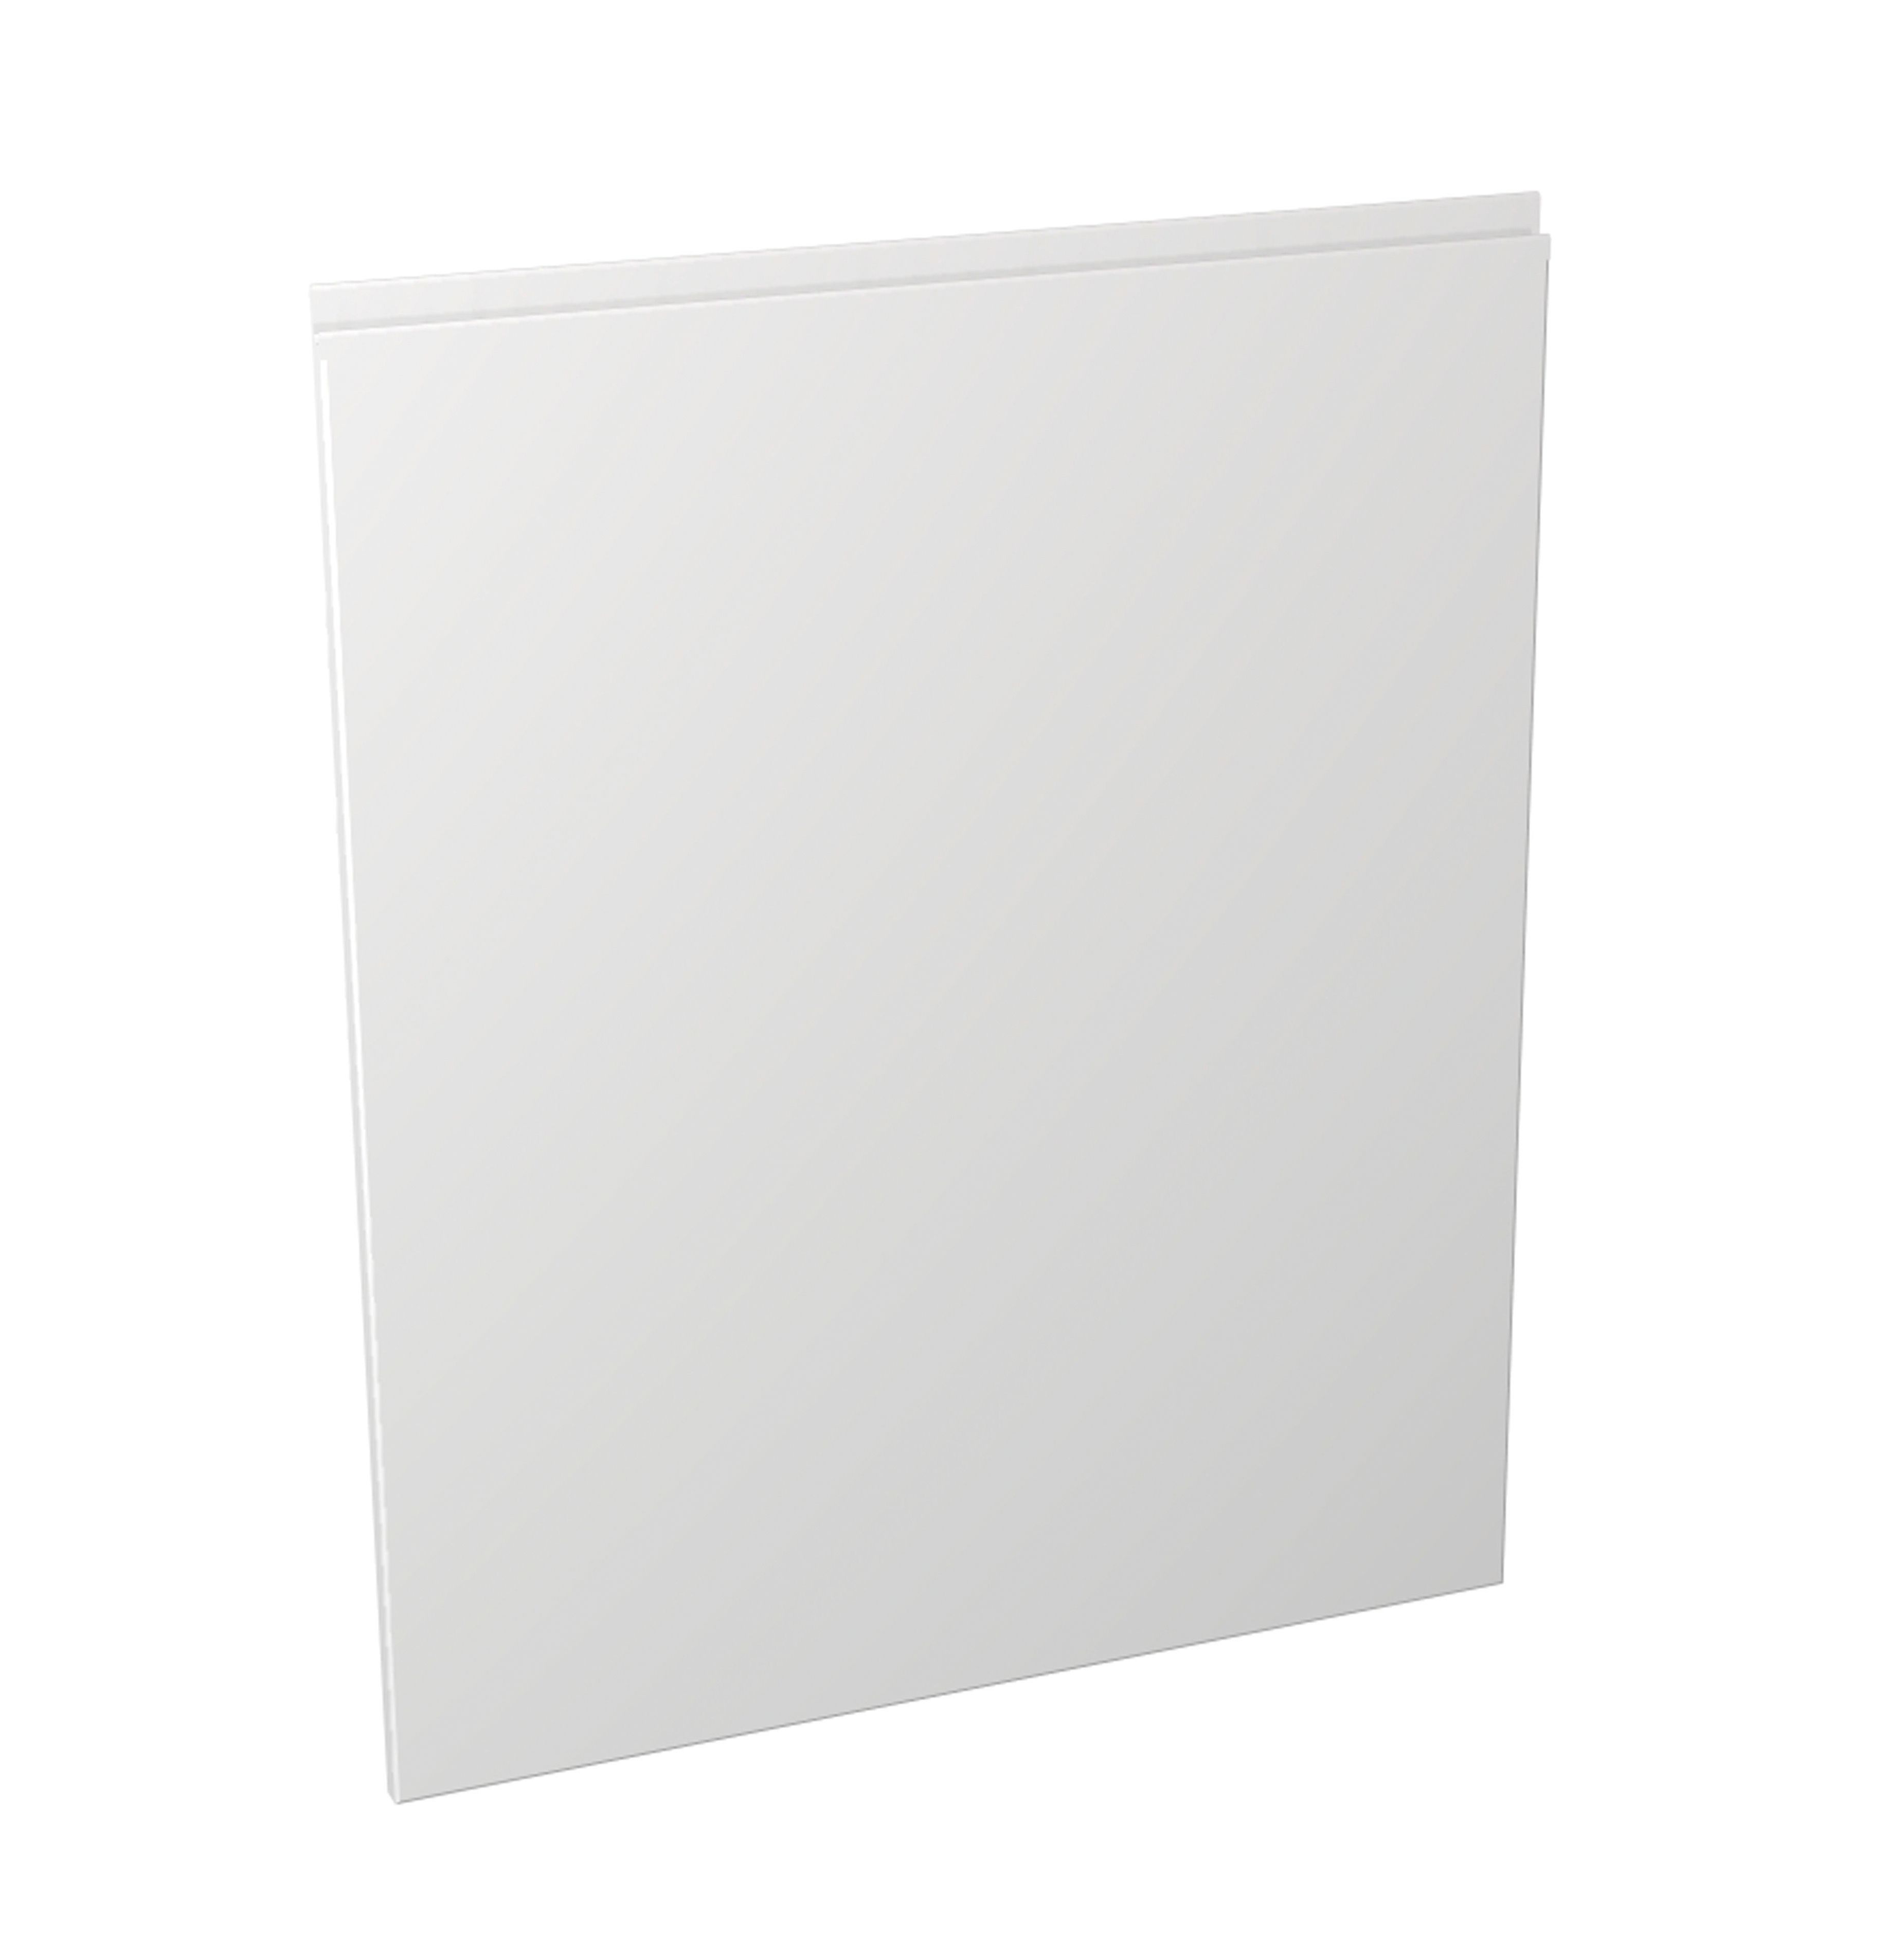 Wickes Madison White Gloss Handleless Appliance Door (B) - 600 x 731mm